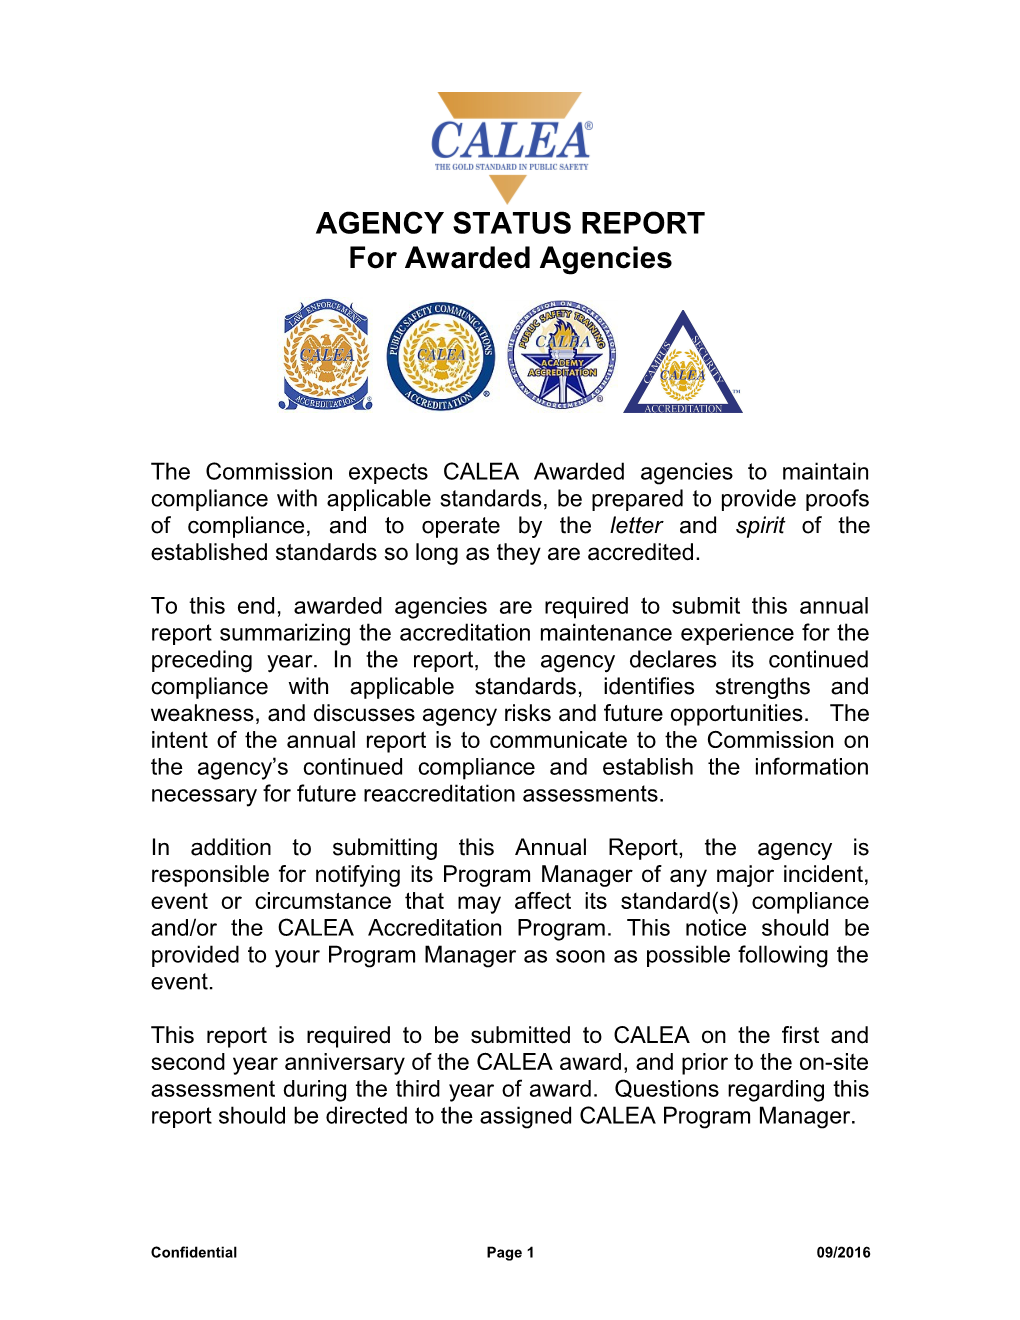 Calea Agency Annual Report